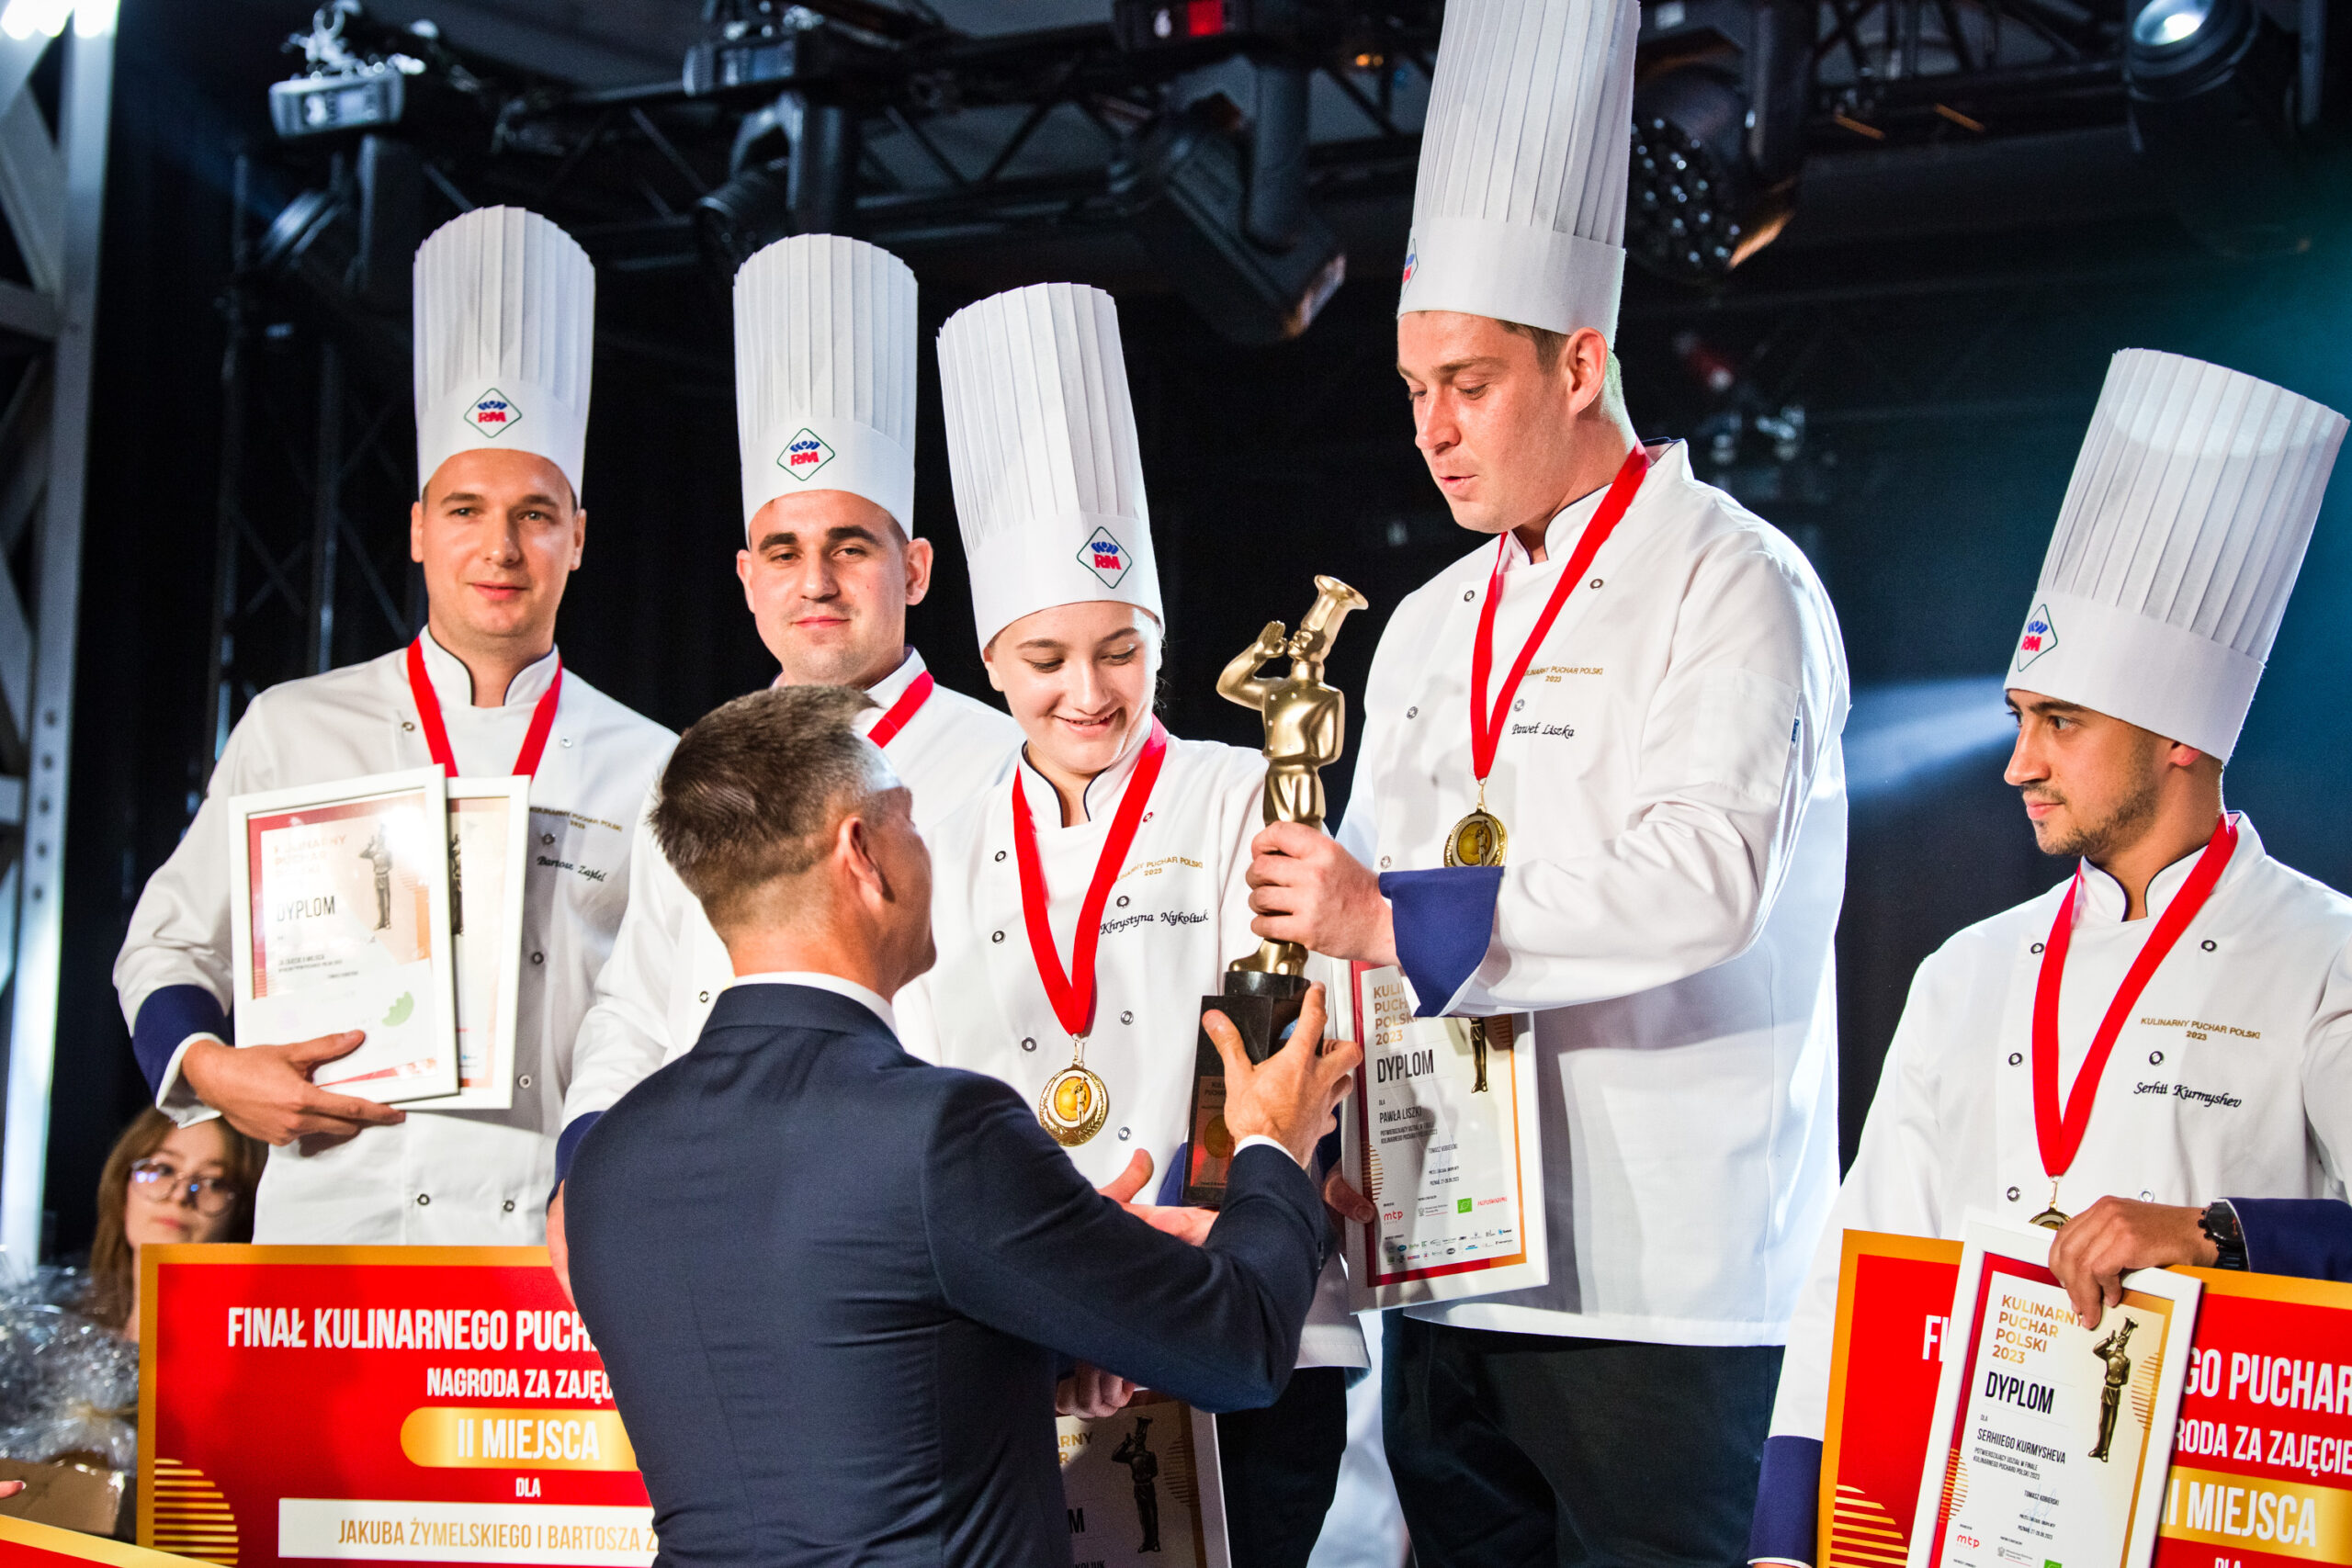 Kulinarny Puchar Polski